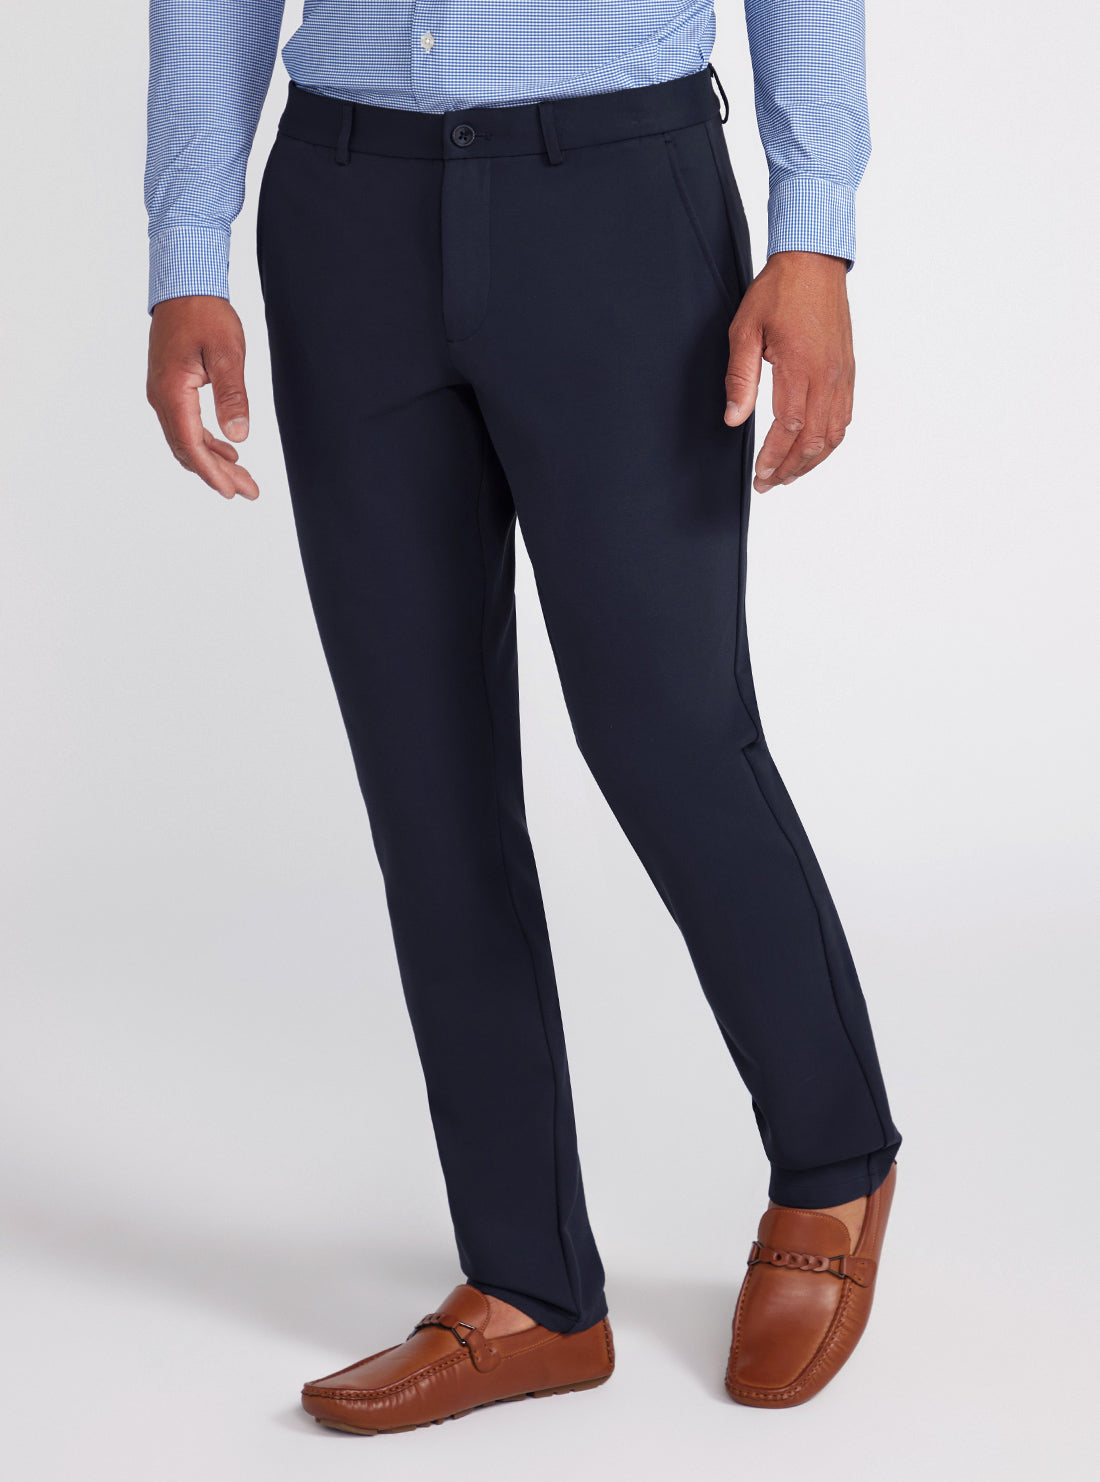 Navy Blue Myron Dress Pants | GUESS Men's Apparel | front view